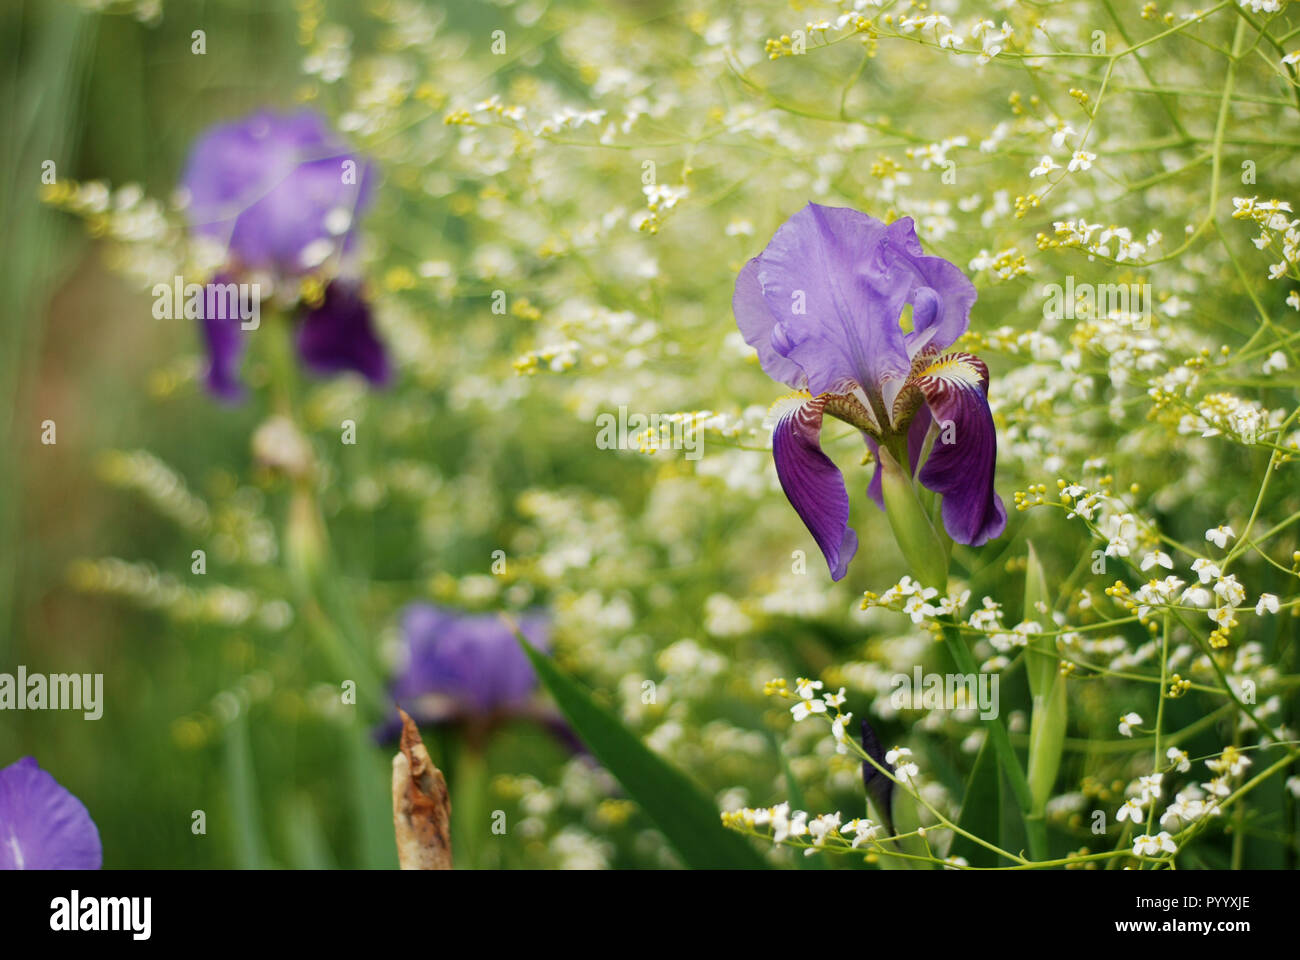 Iris Blume im grünen Garten Nahaufnahme Stockfoto